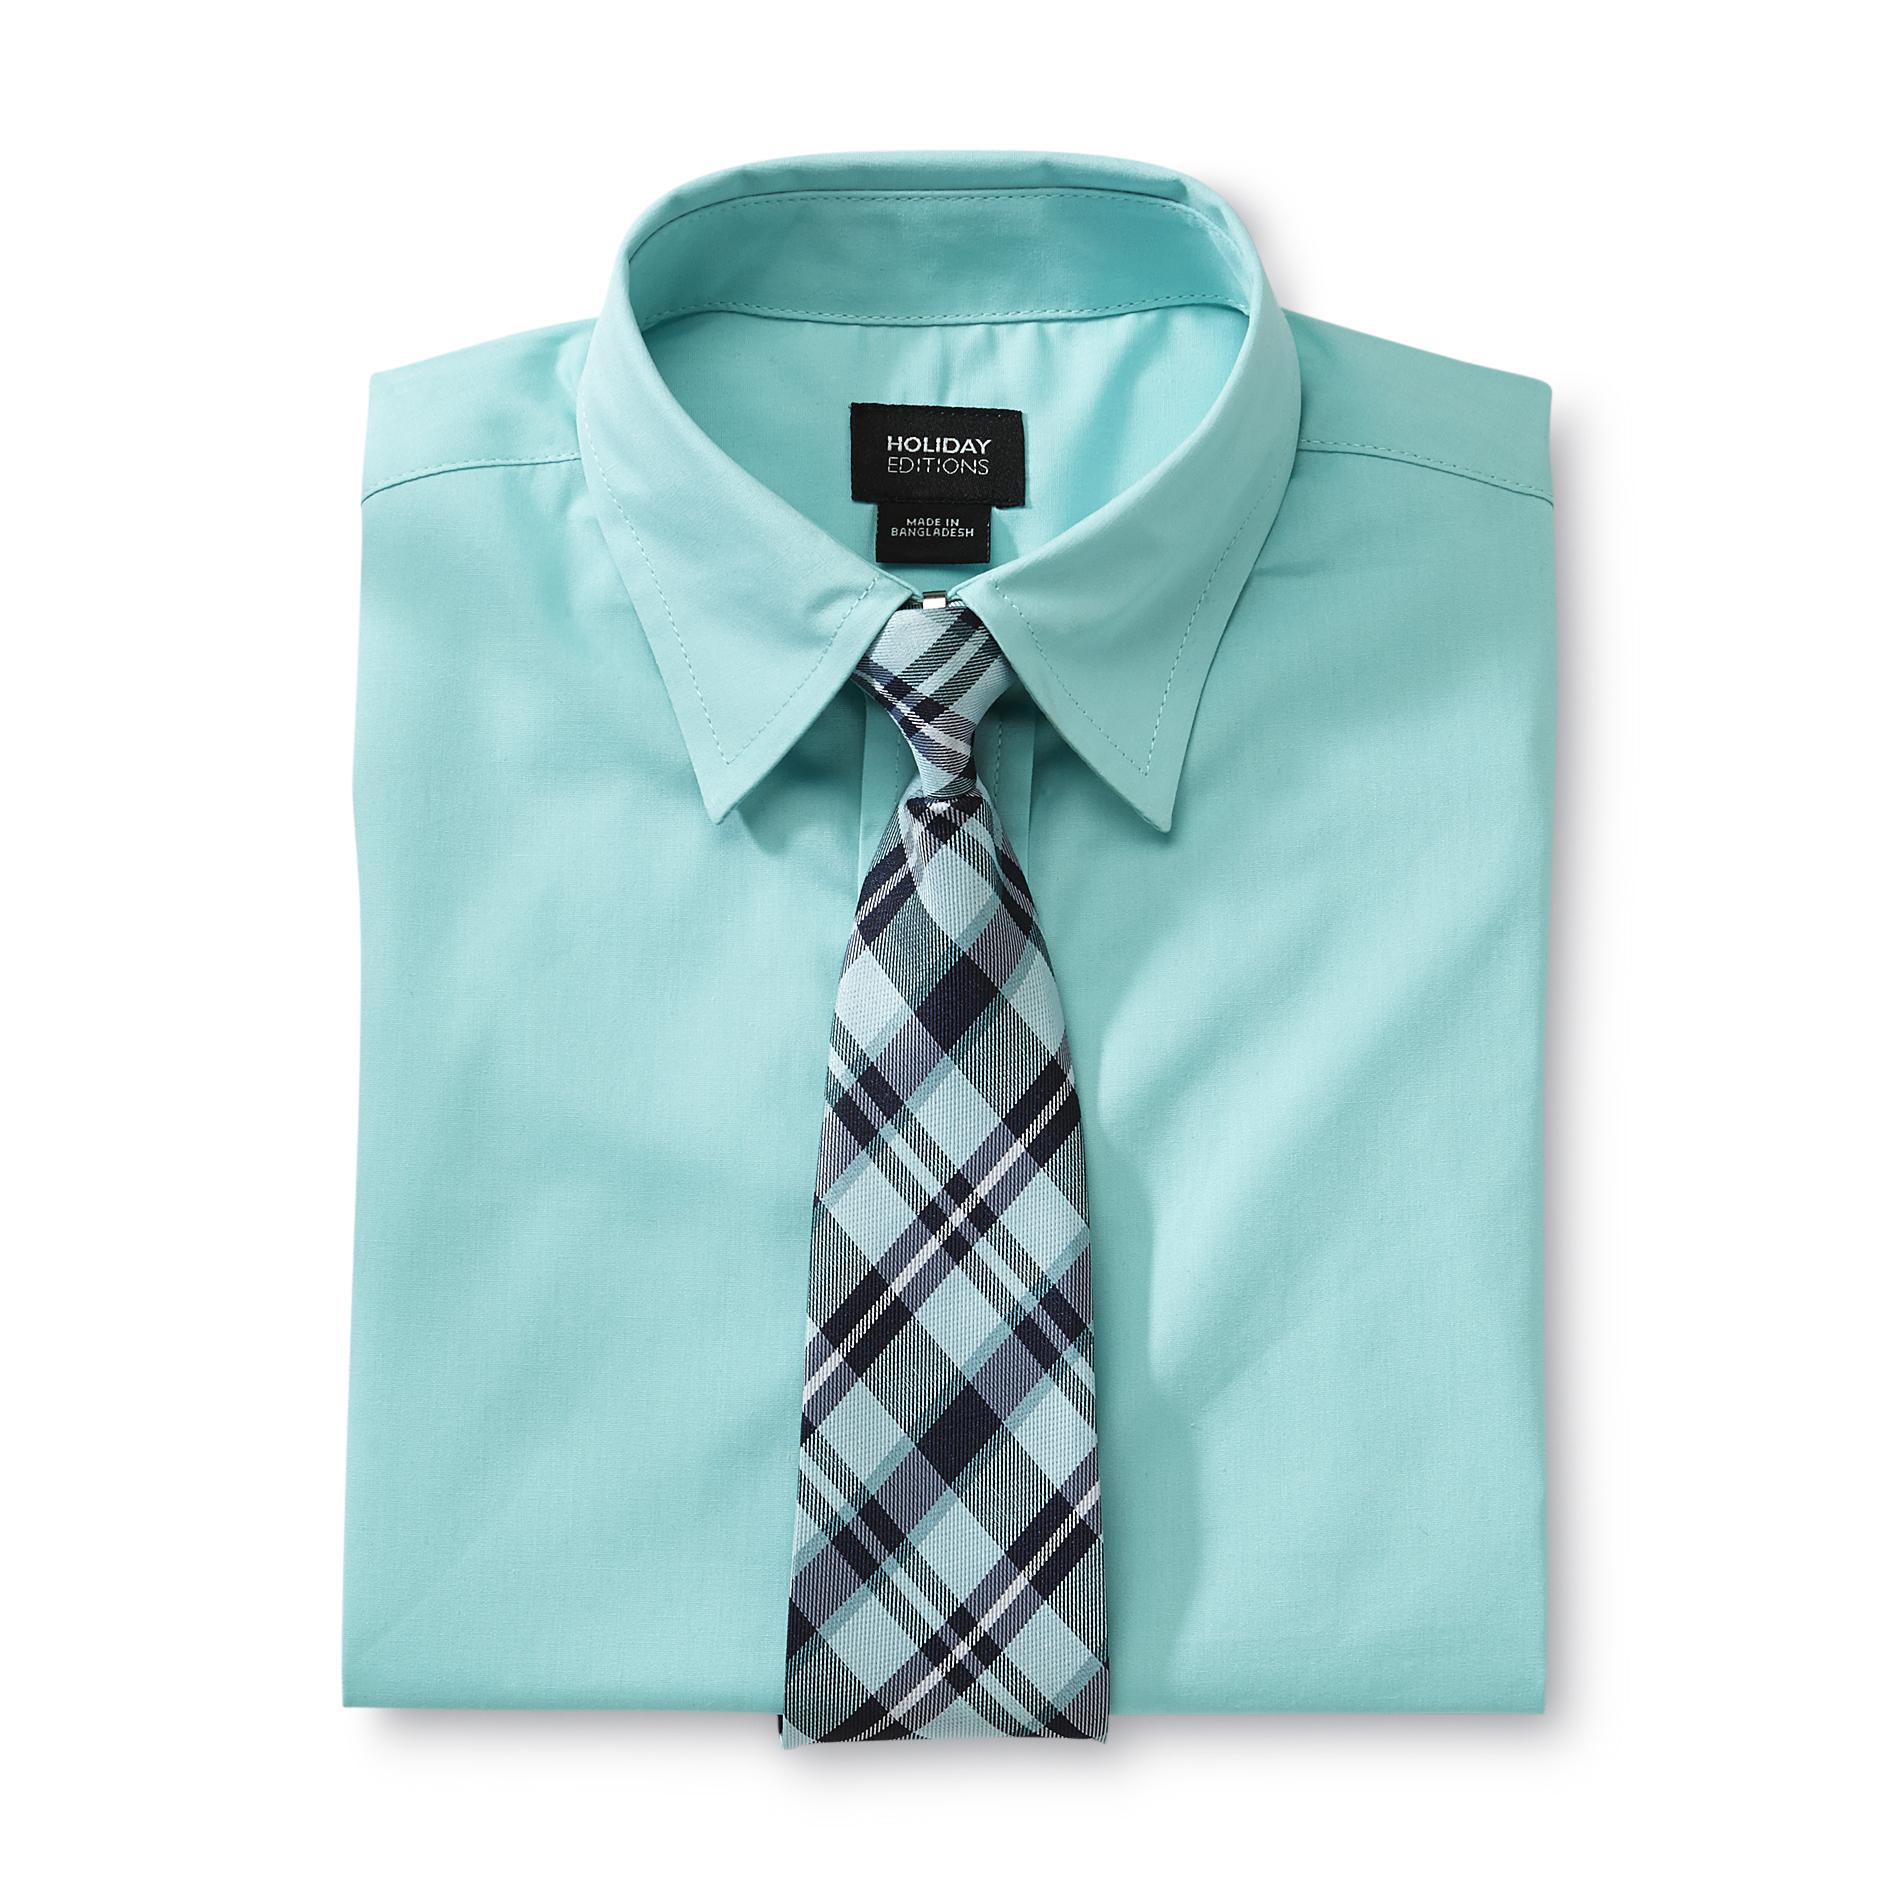 Holiday Editions Boy's Dress Shirt & Tie - Plaid